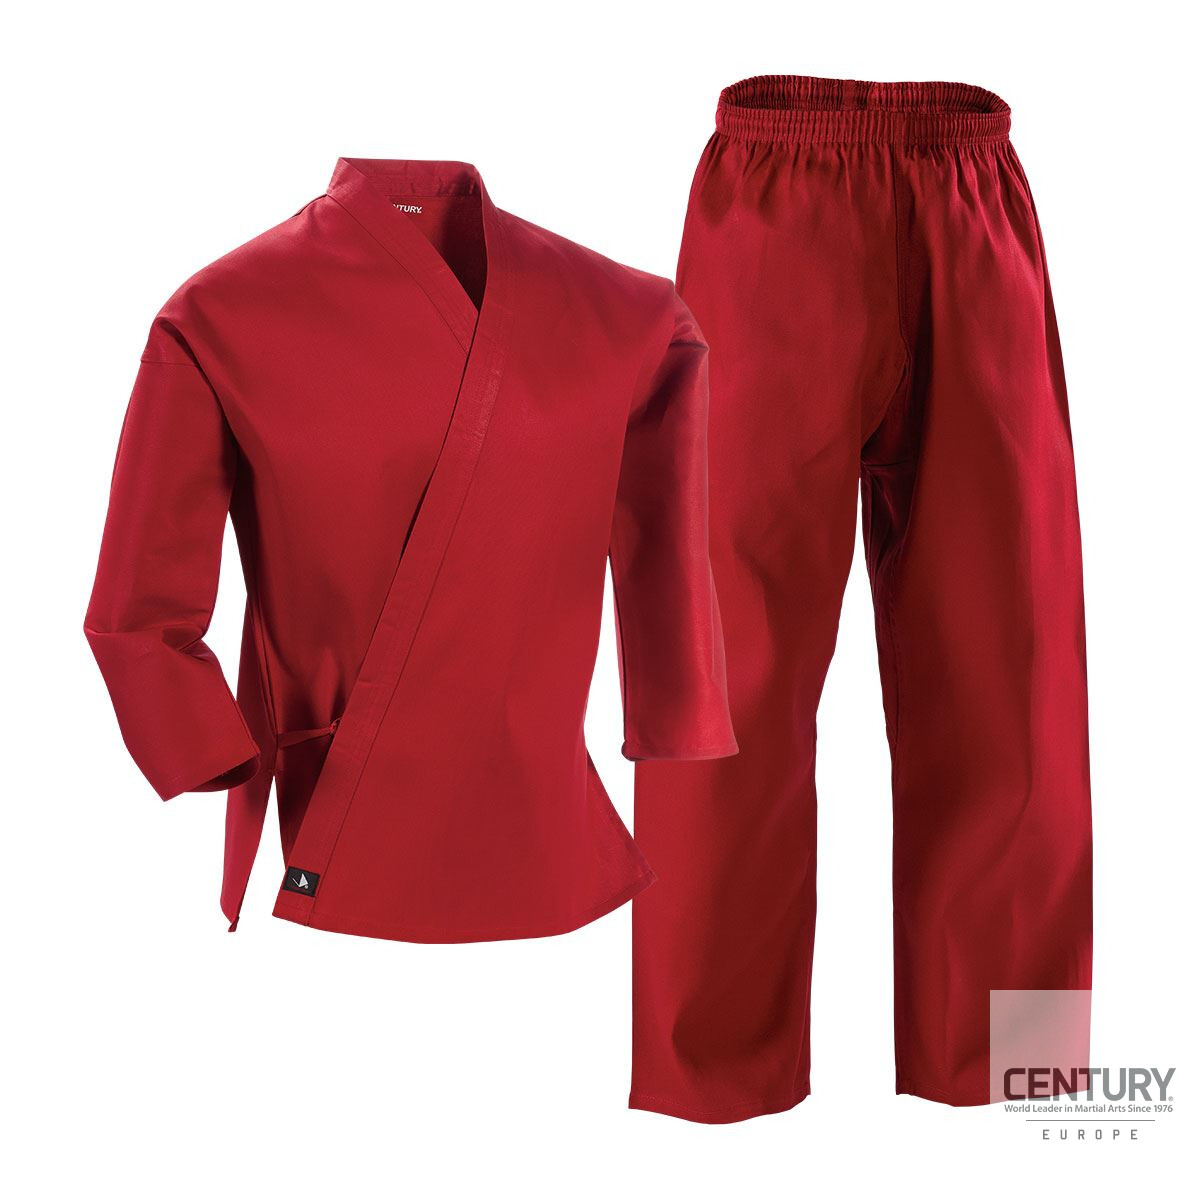 Lightweight Student Uniform 6 oz Red